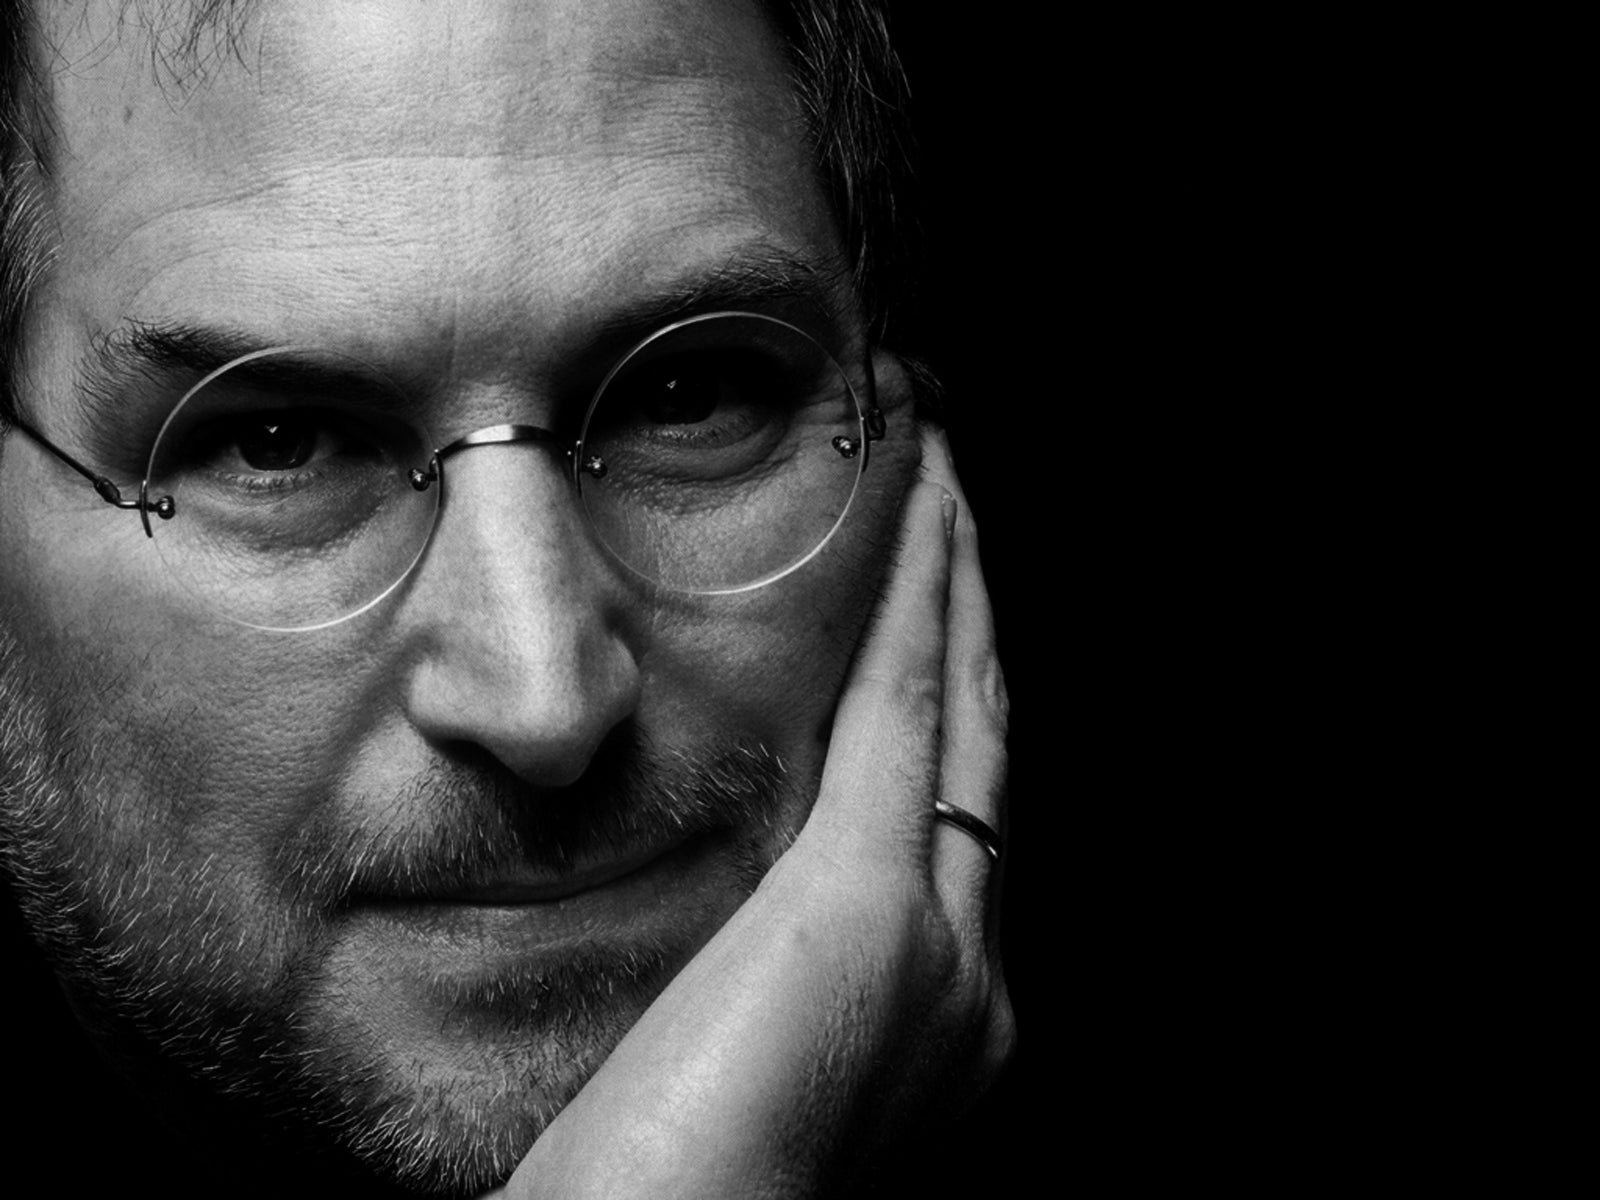 Apple added market value despite the death of Steve Jobs - Study: Apple still world's top brand